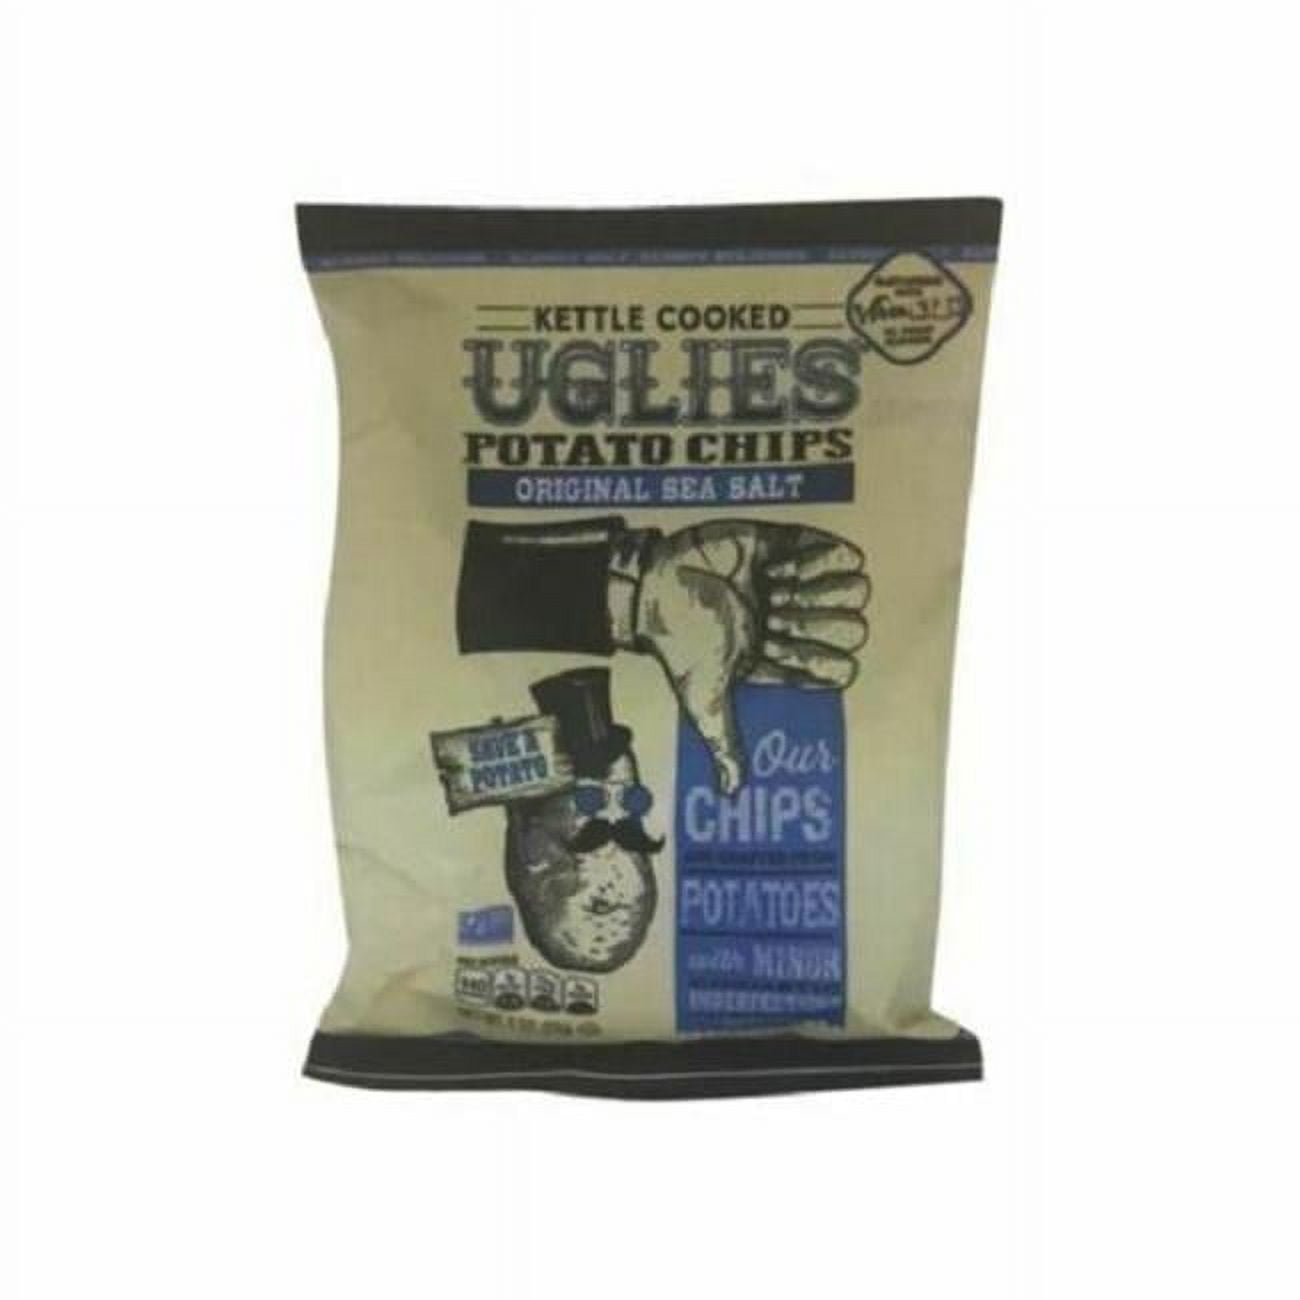 Uglies Potato Chips Original Sea Salt 1 Oz Bag